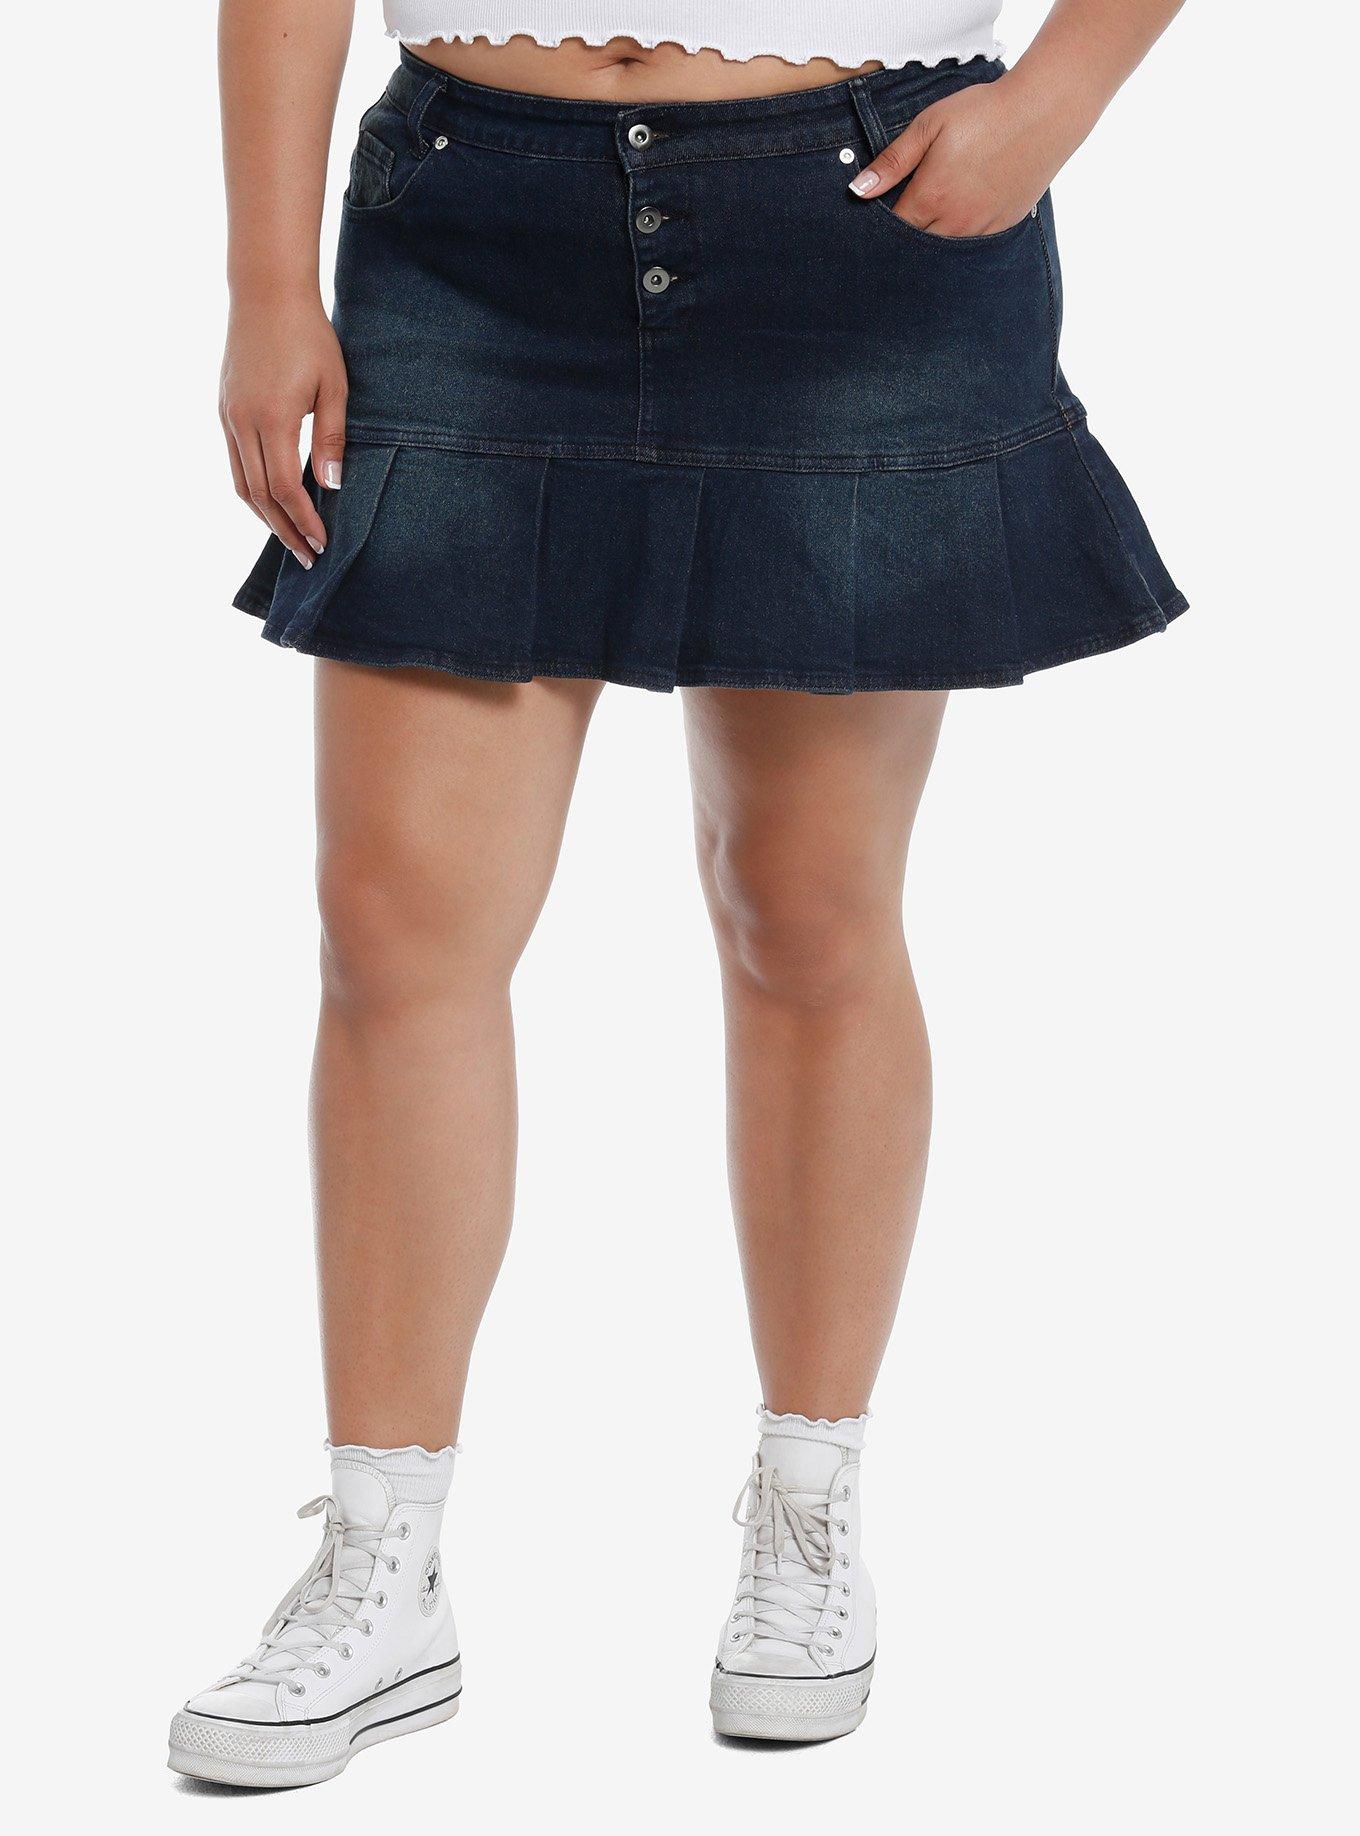 Social Collision Star Bling Dark Denim Pleated Mini Skirt Plus Size, , hi-res